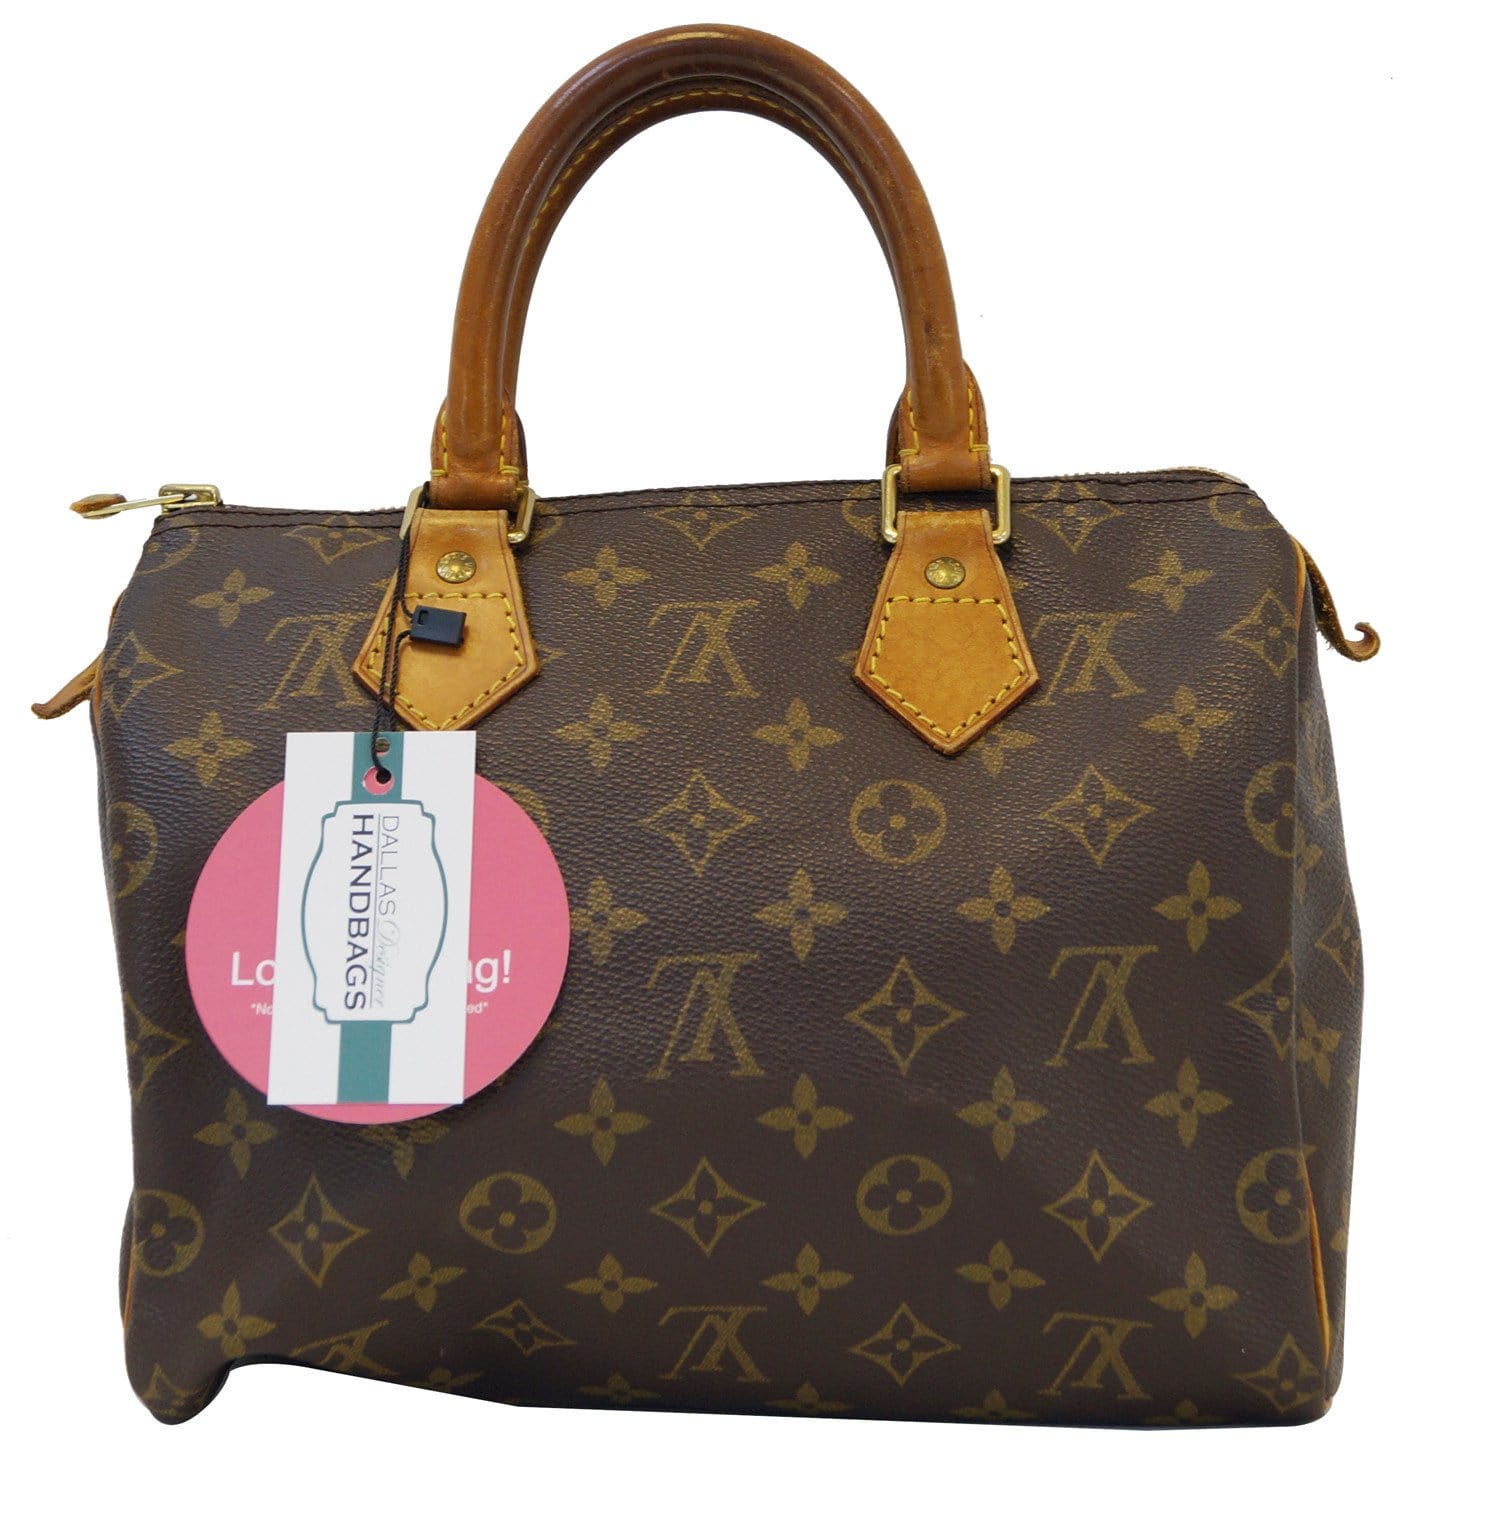 Louis Vuitton Speedy 25, Speedy 25 Handbag